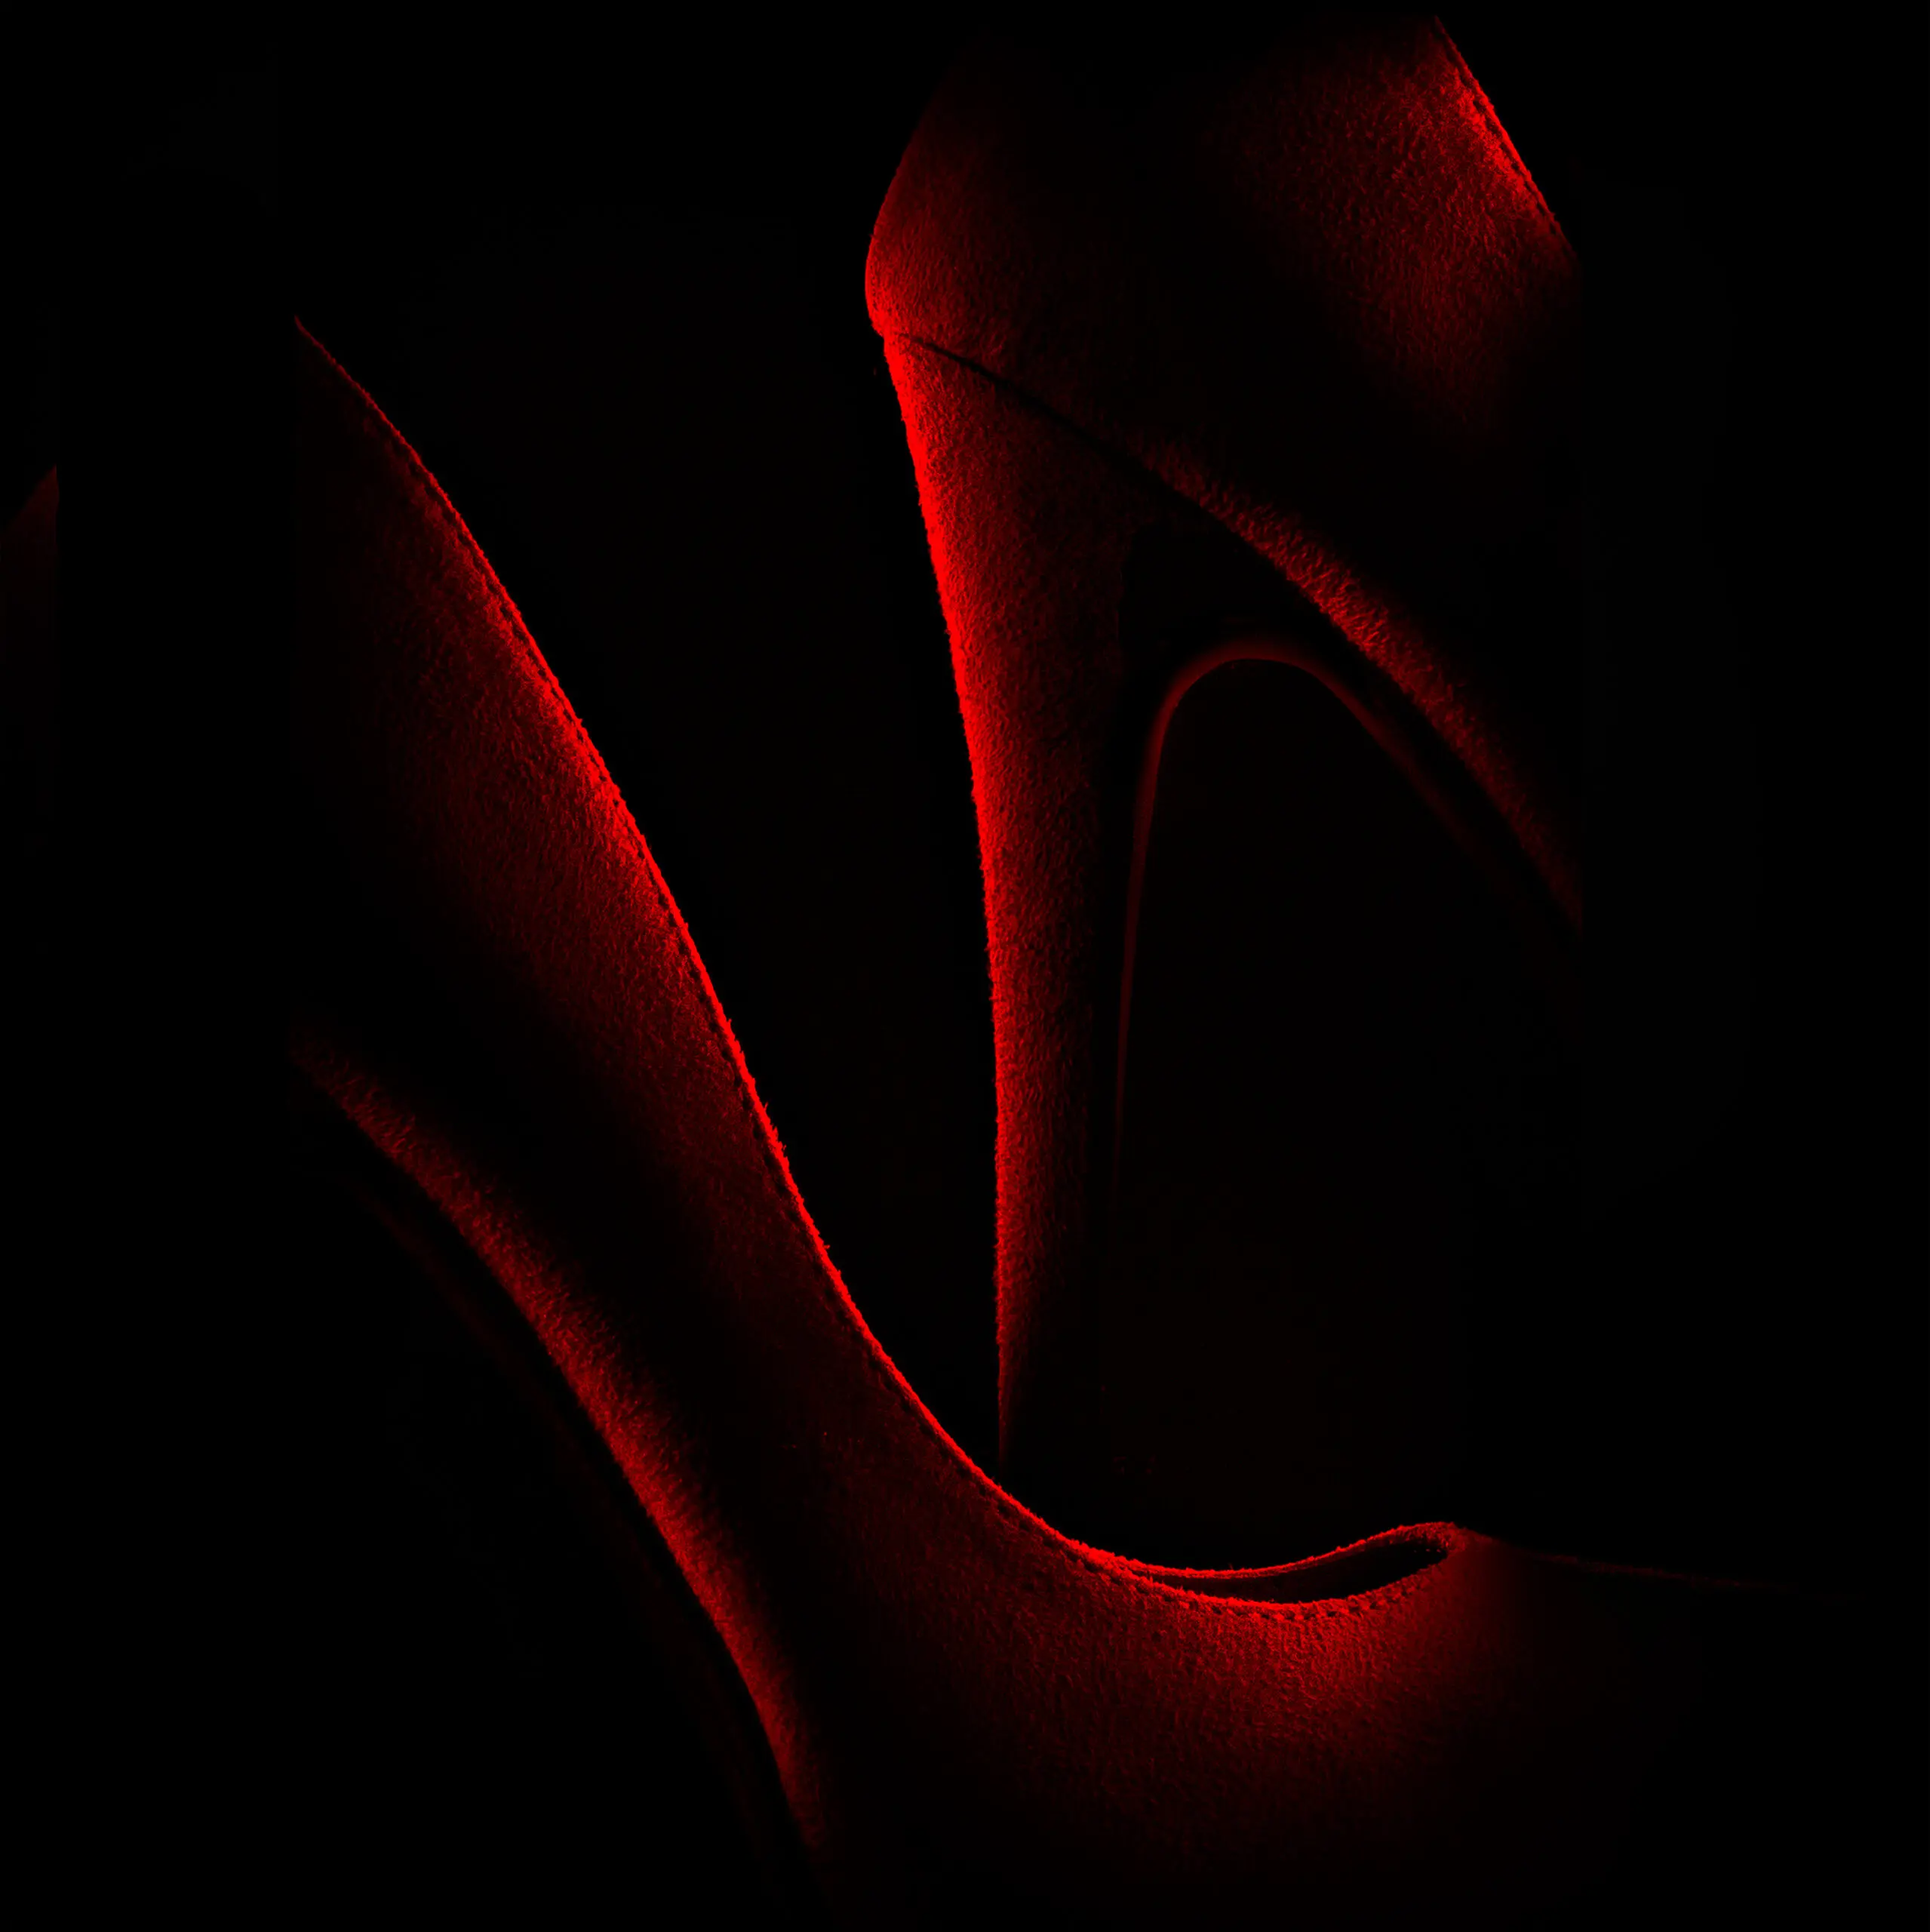 Wandbild (2922) Shoe in Red präsentiert: Stillleben,Kreatives